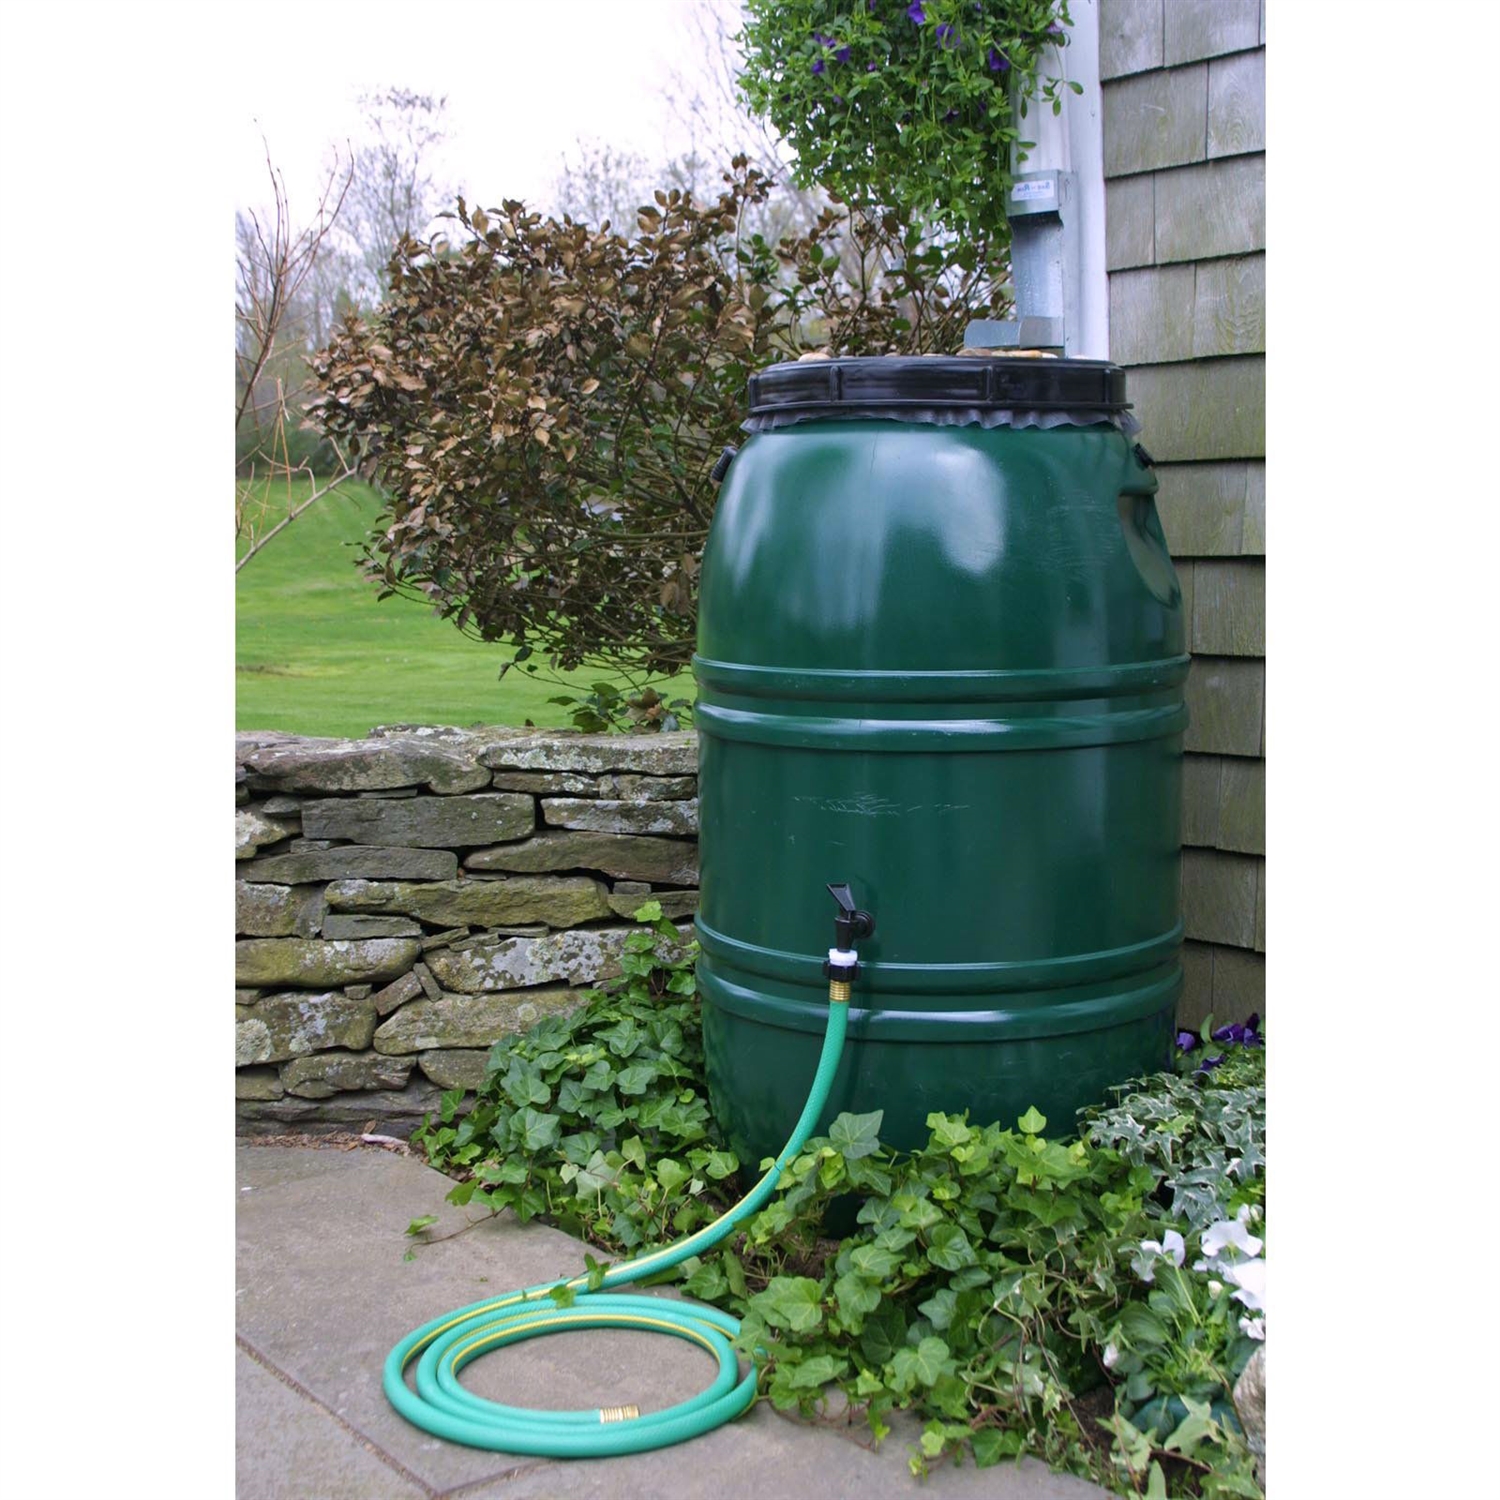 Image of rain barrel.